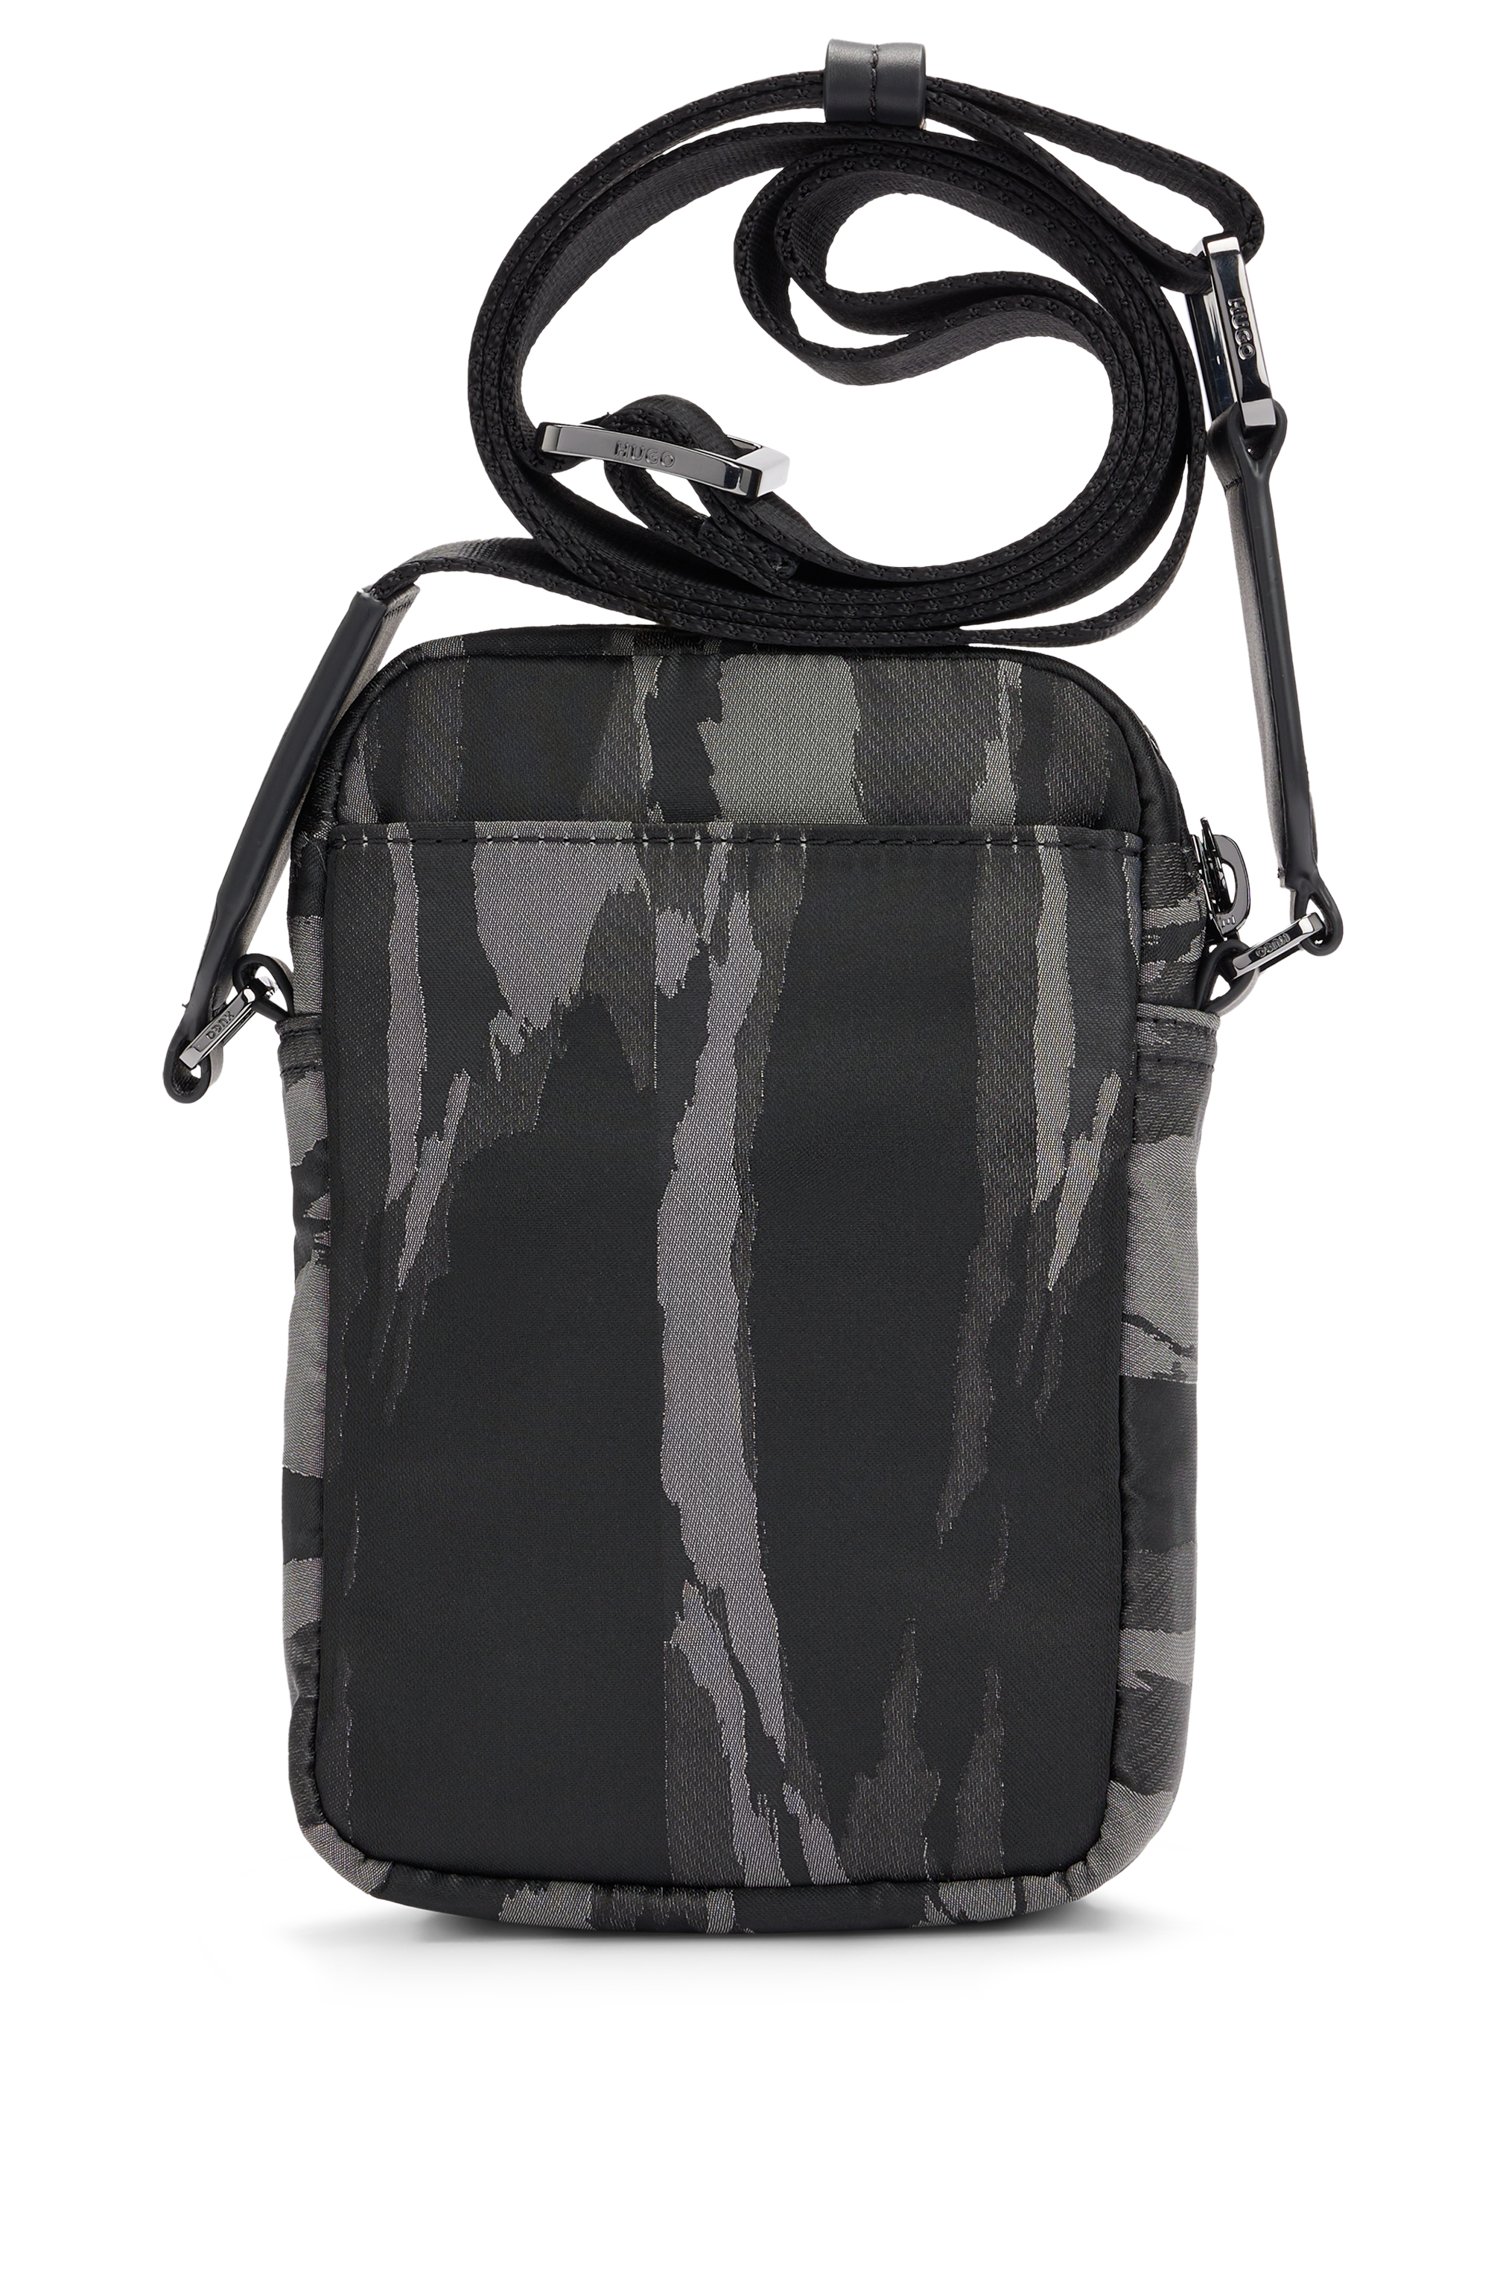 Stacked-logo reporter bag with seasonal pattern